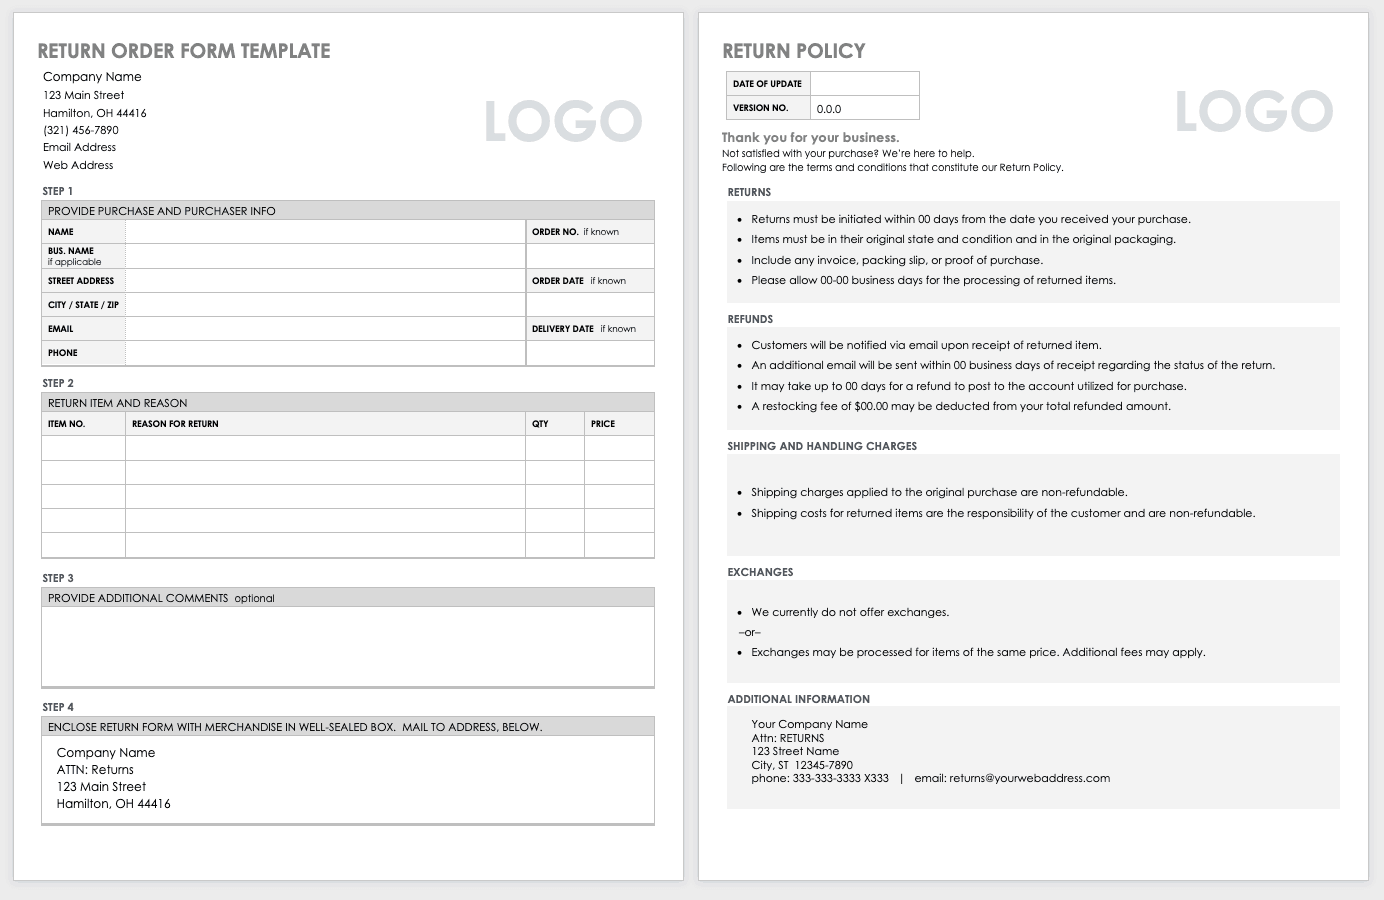 Uniform Order Form Template Excel from www.smartsheet.com